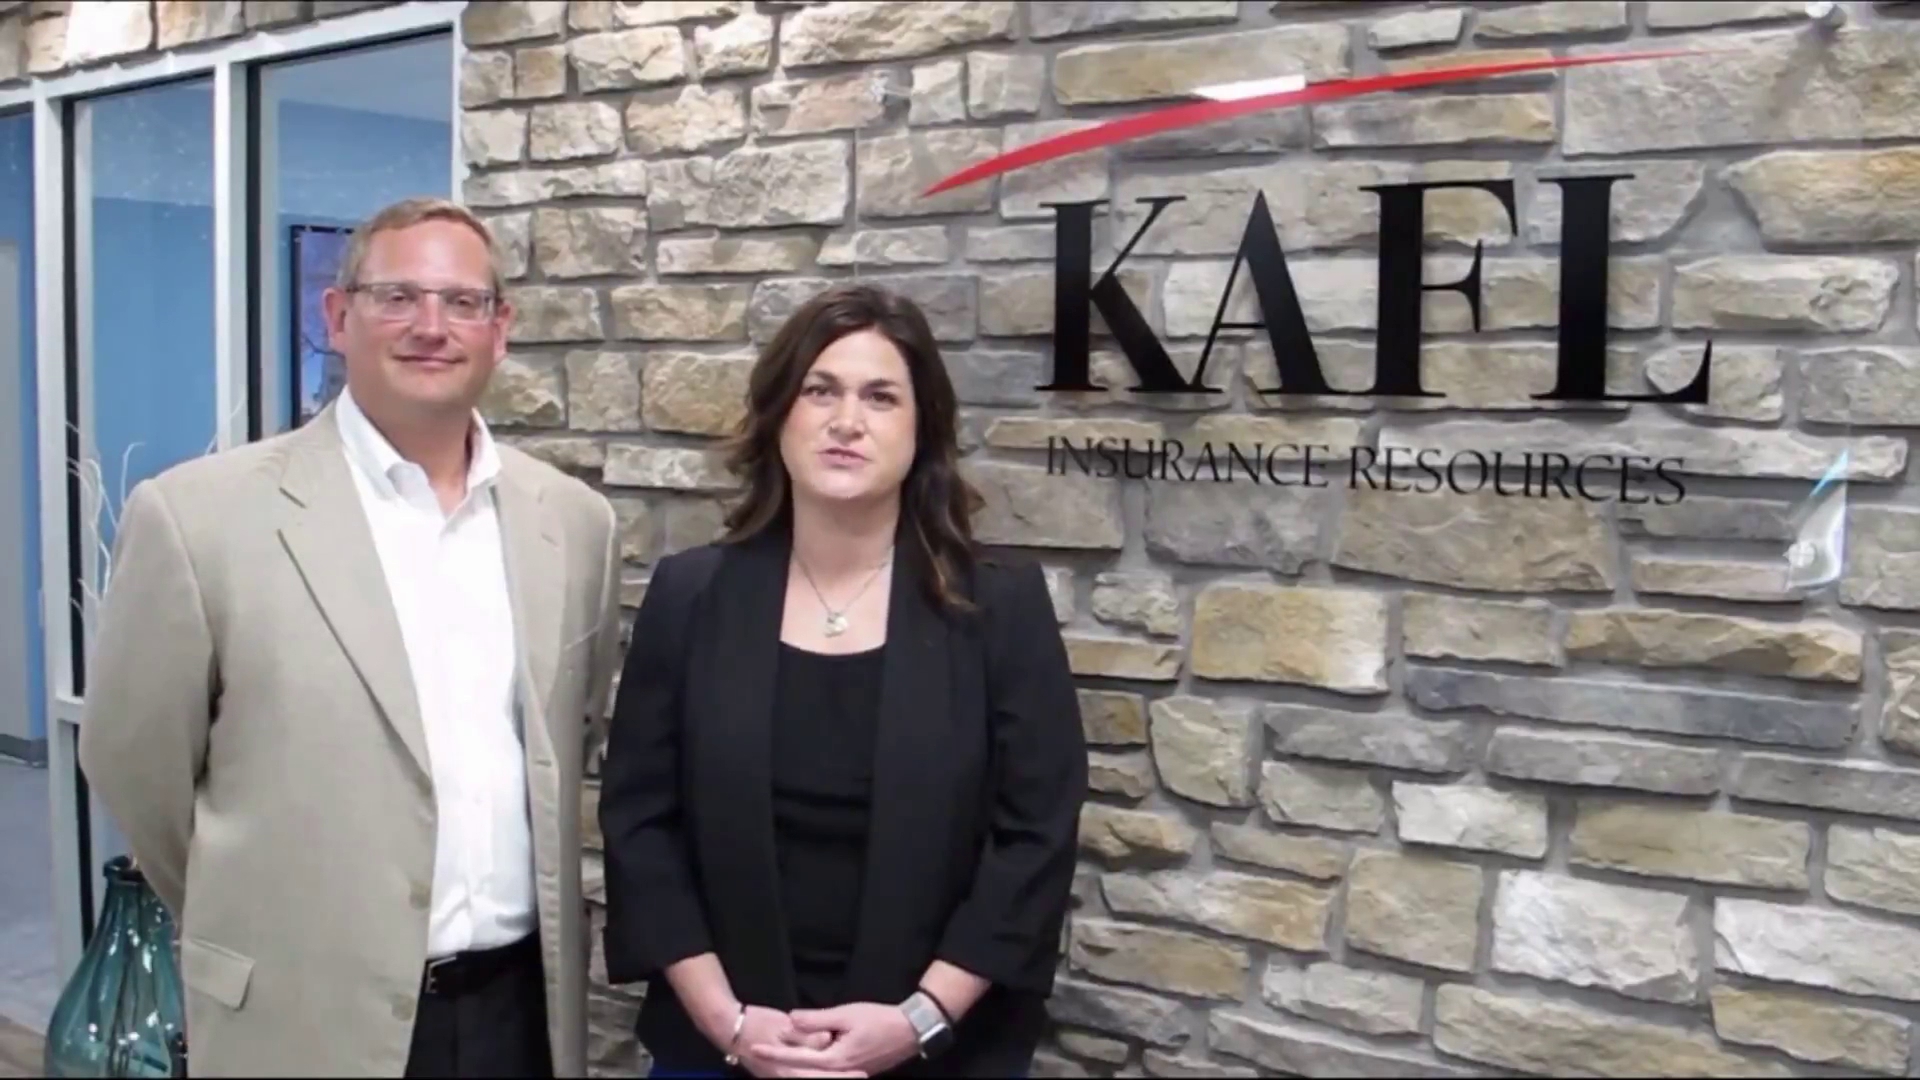 KAFL Insurance Resources